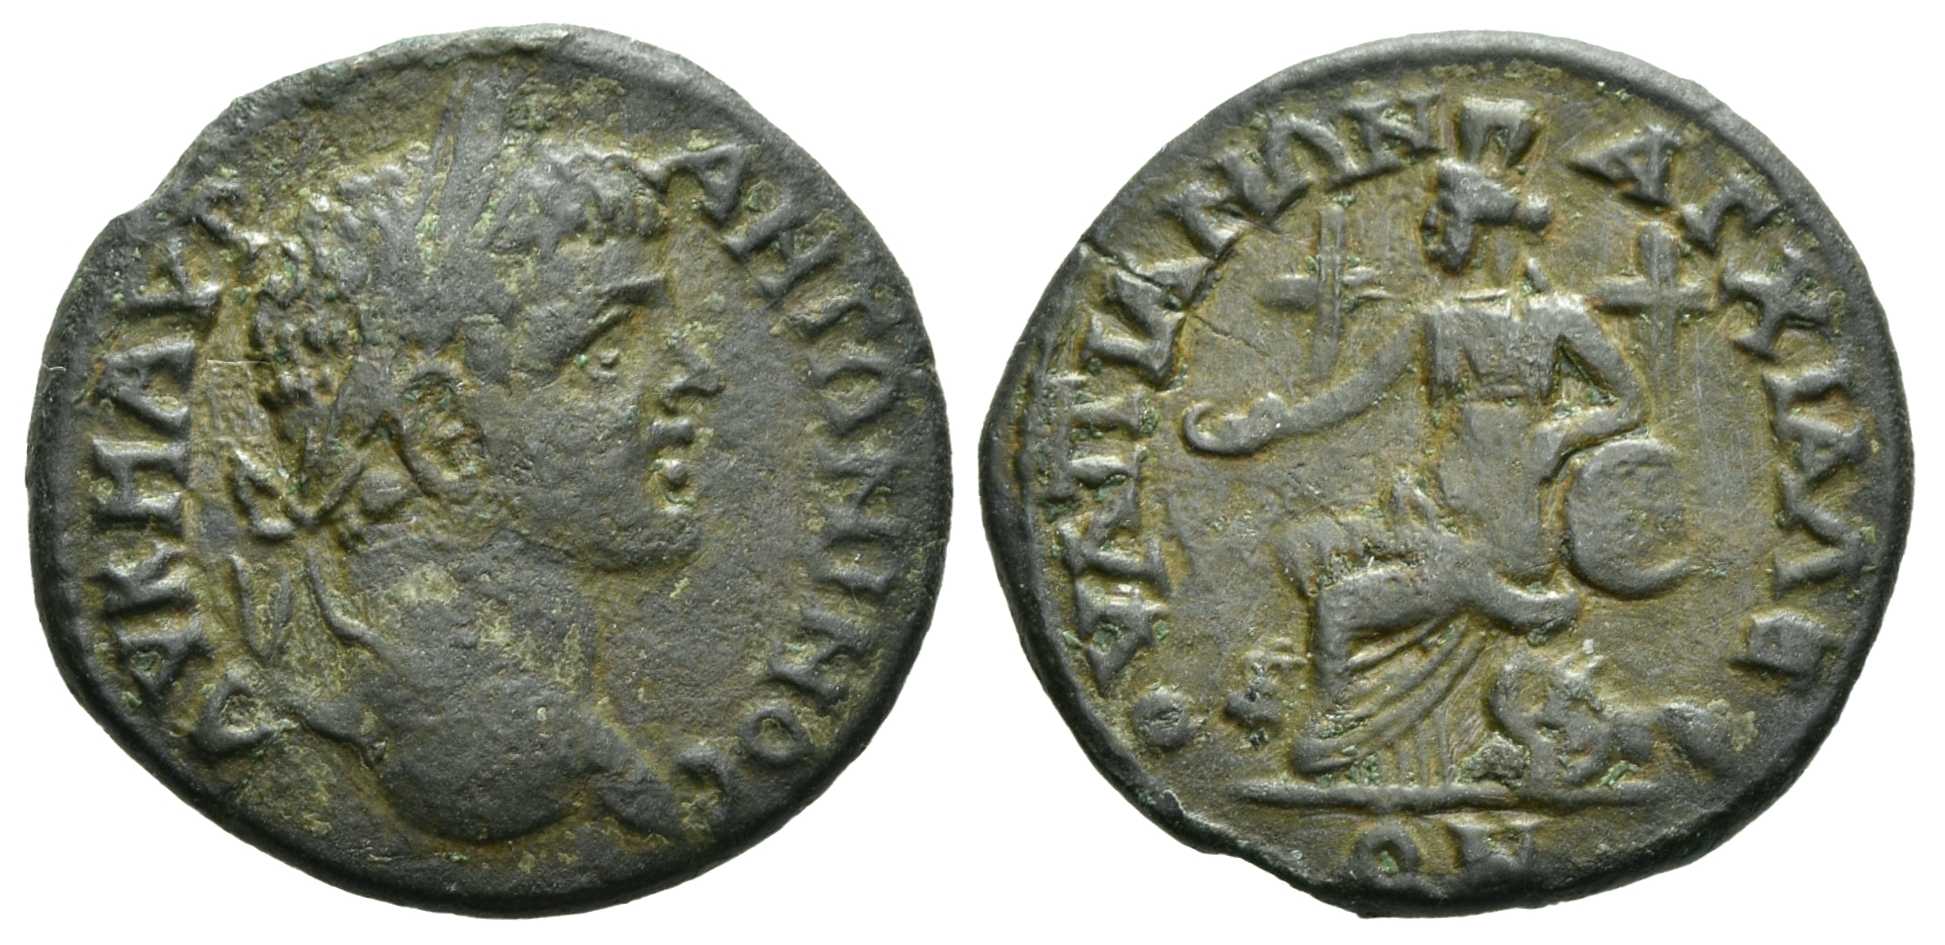 4859 Thrace Anchialus Caracalla AE